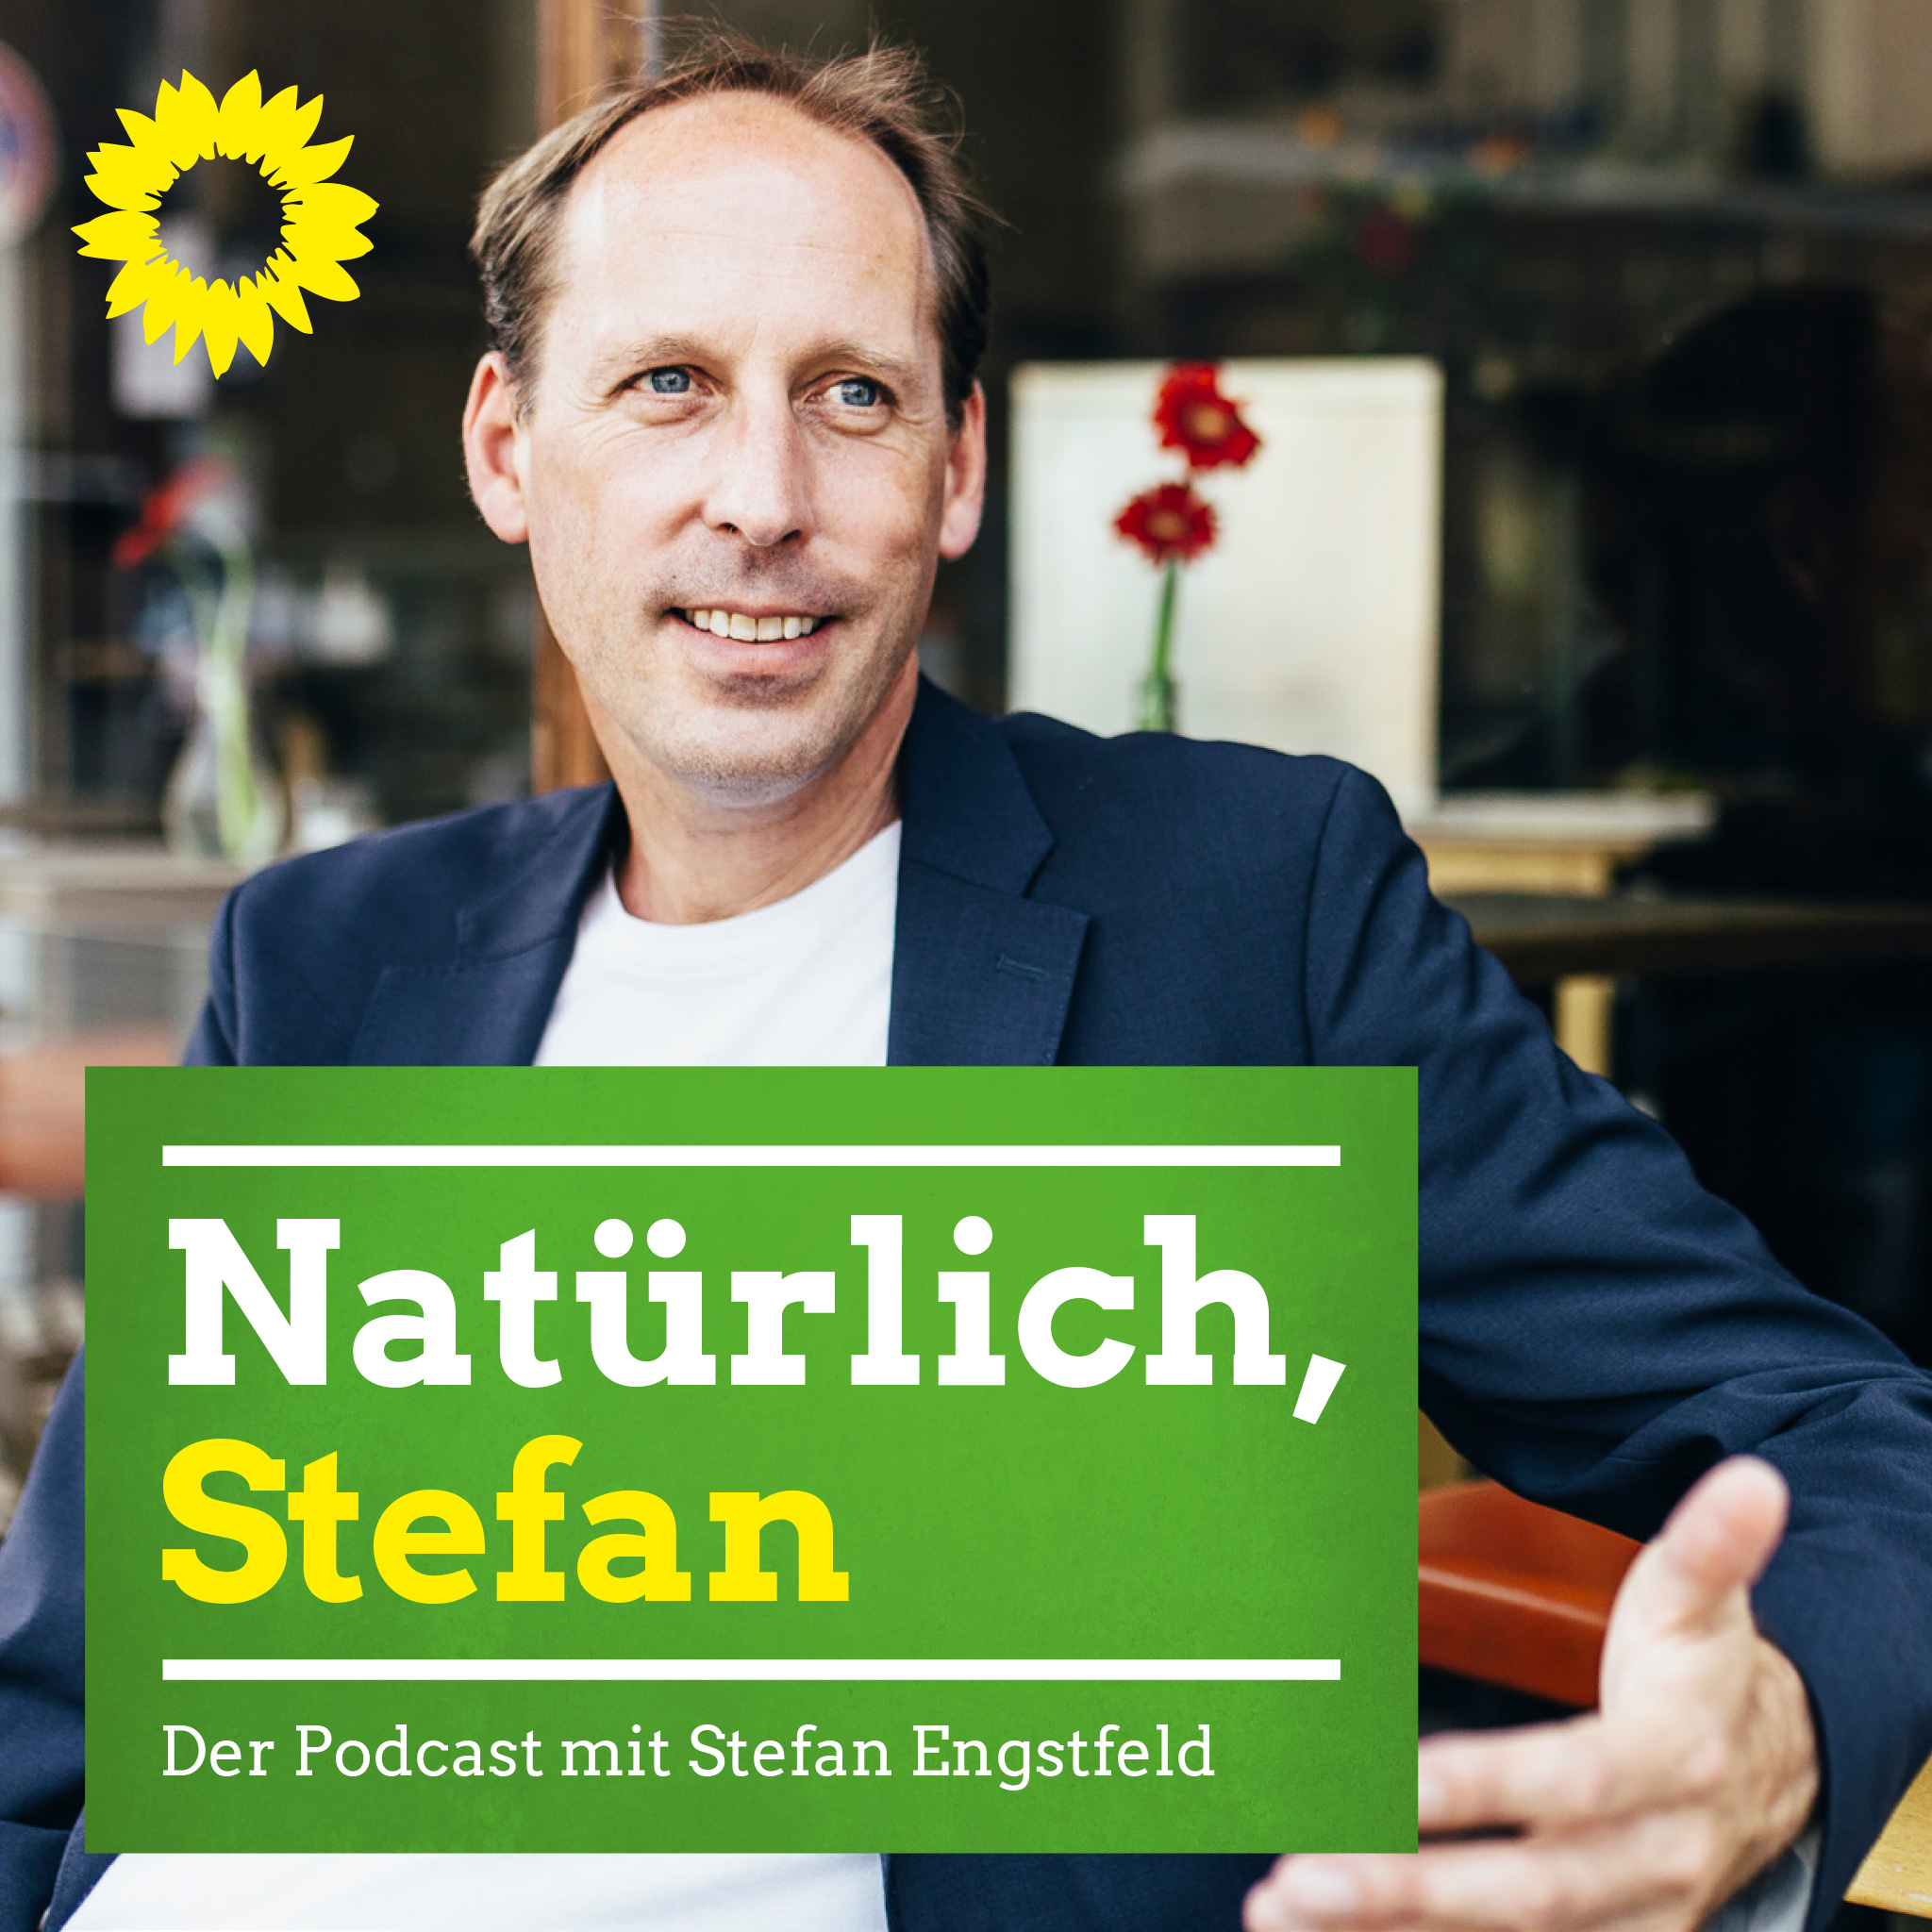 Artwork for podcast Natürlich, Stefan